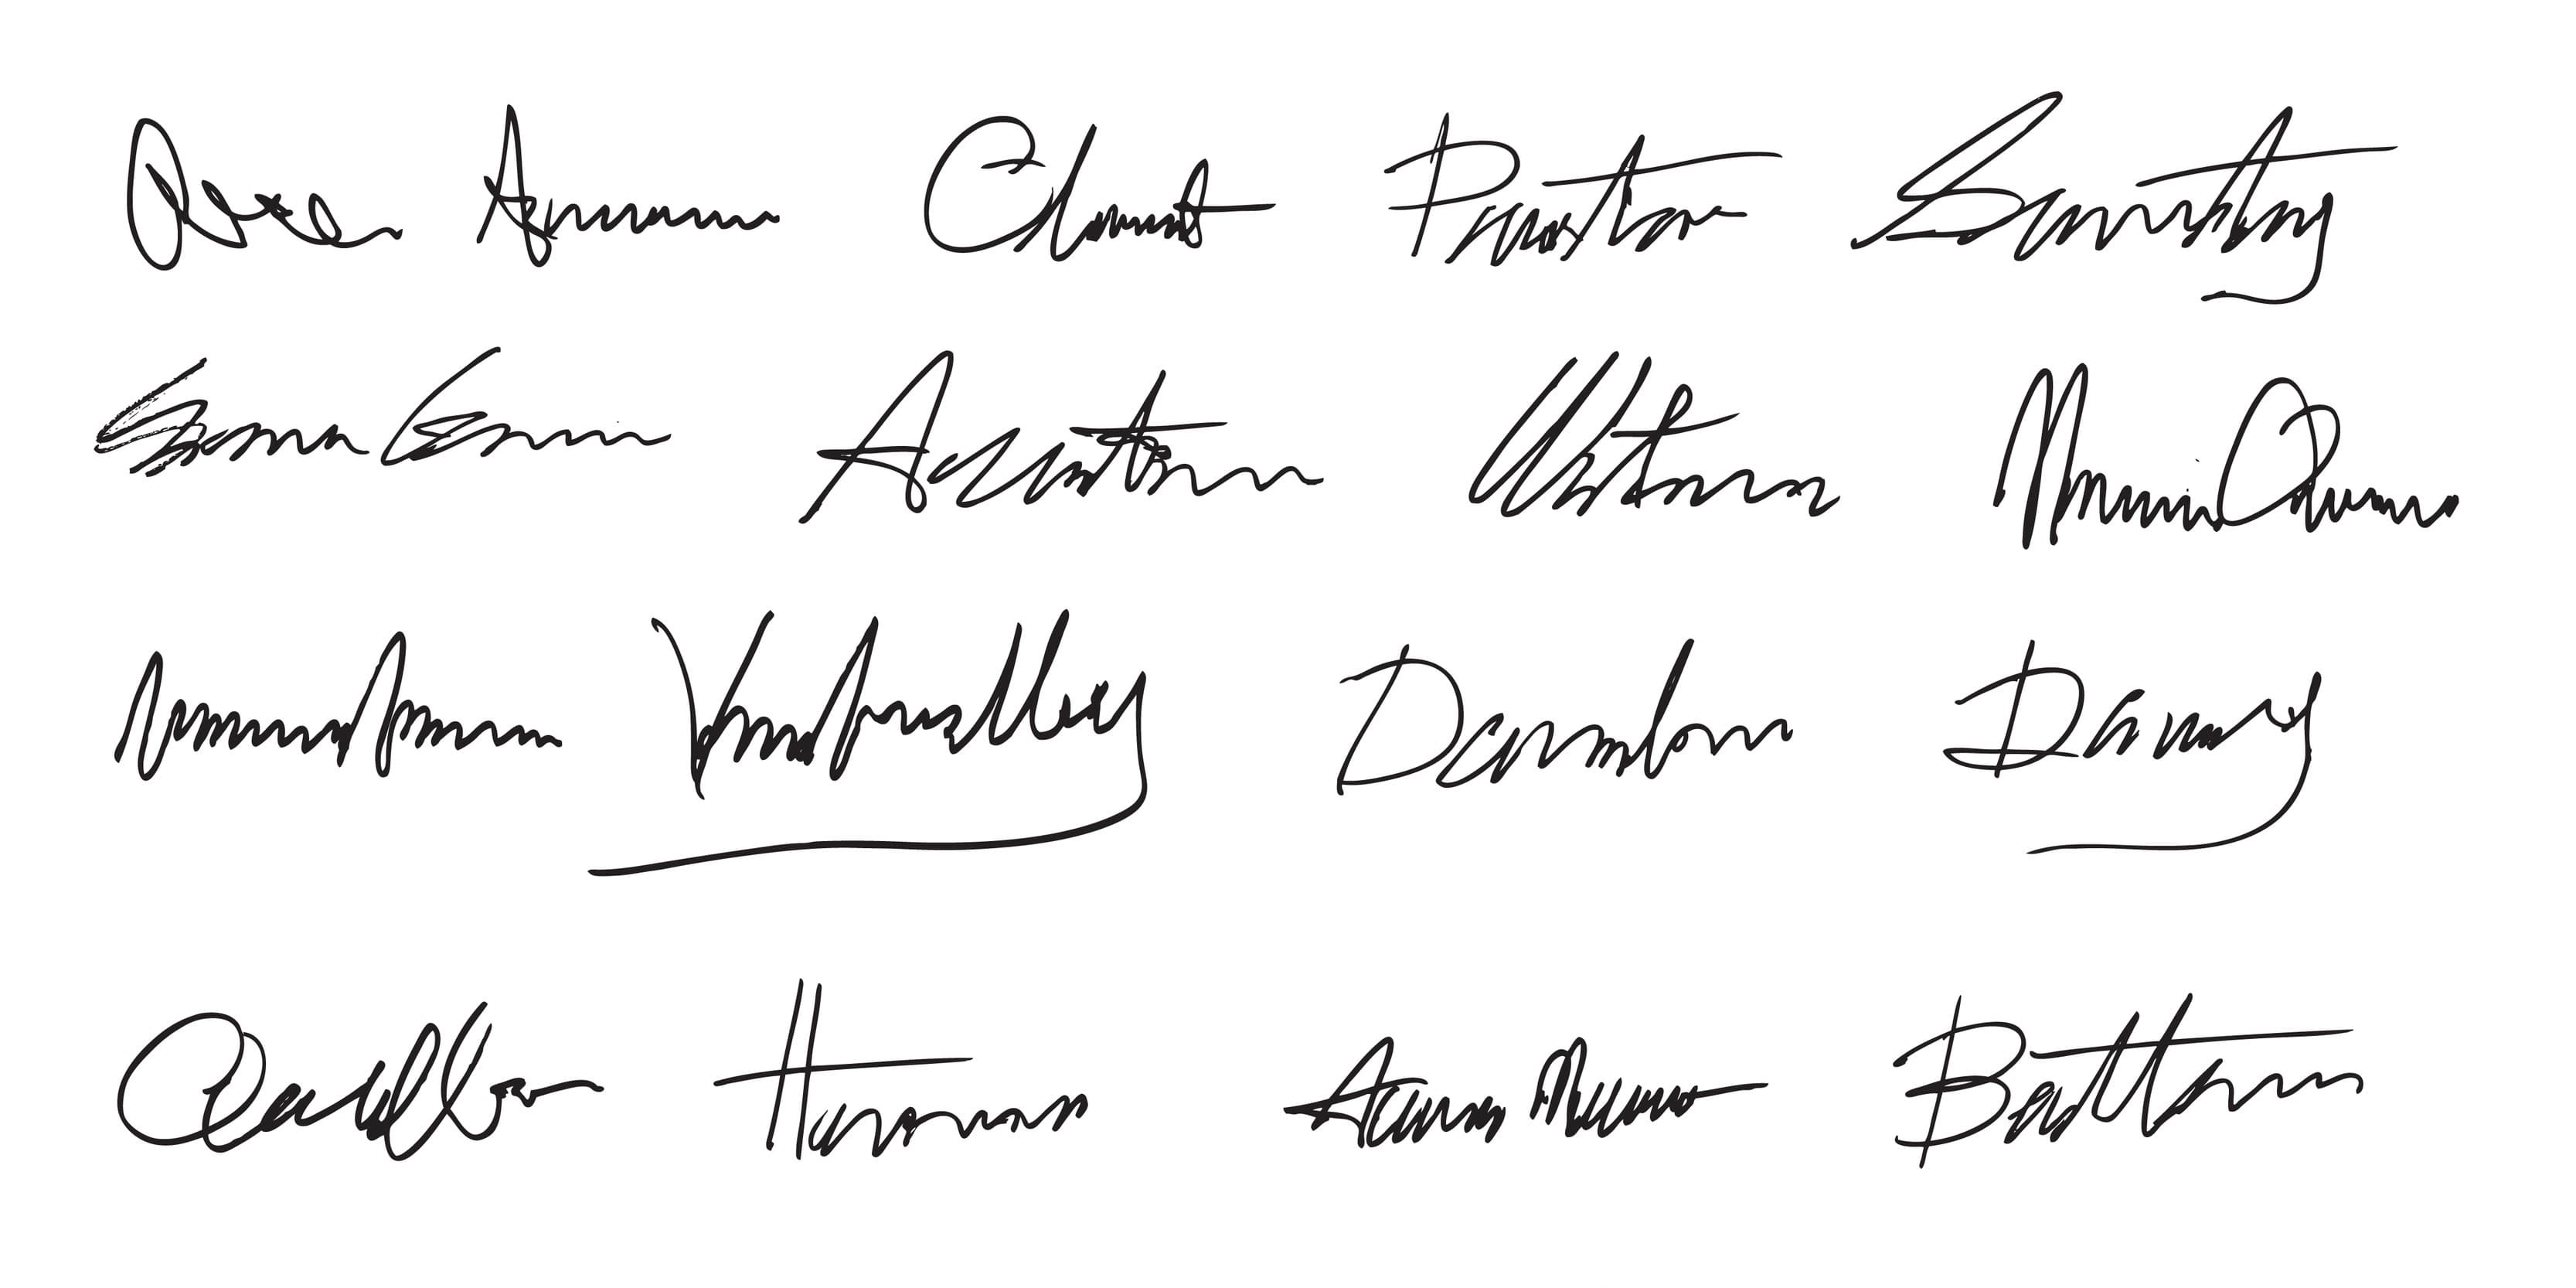 handwritten signatures on a white background